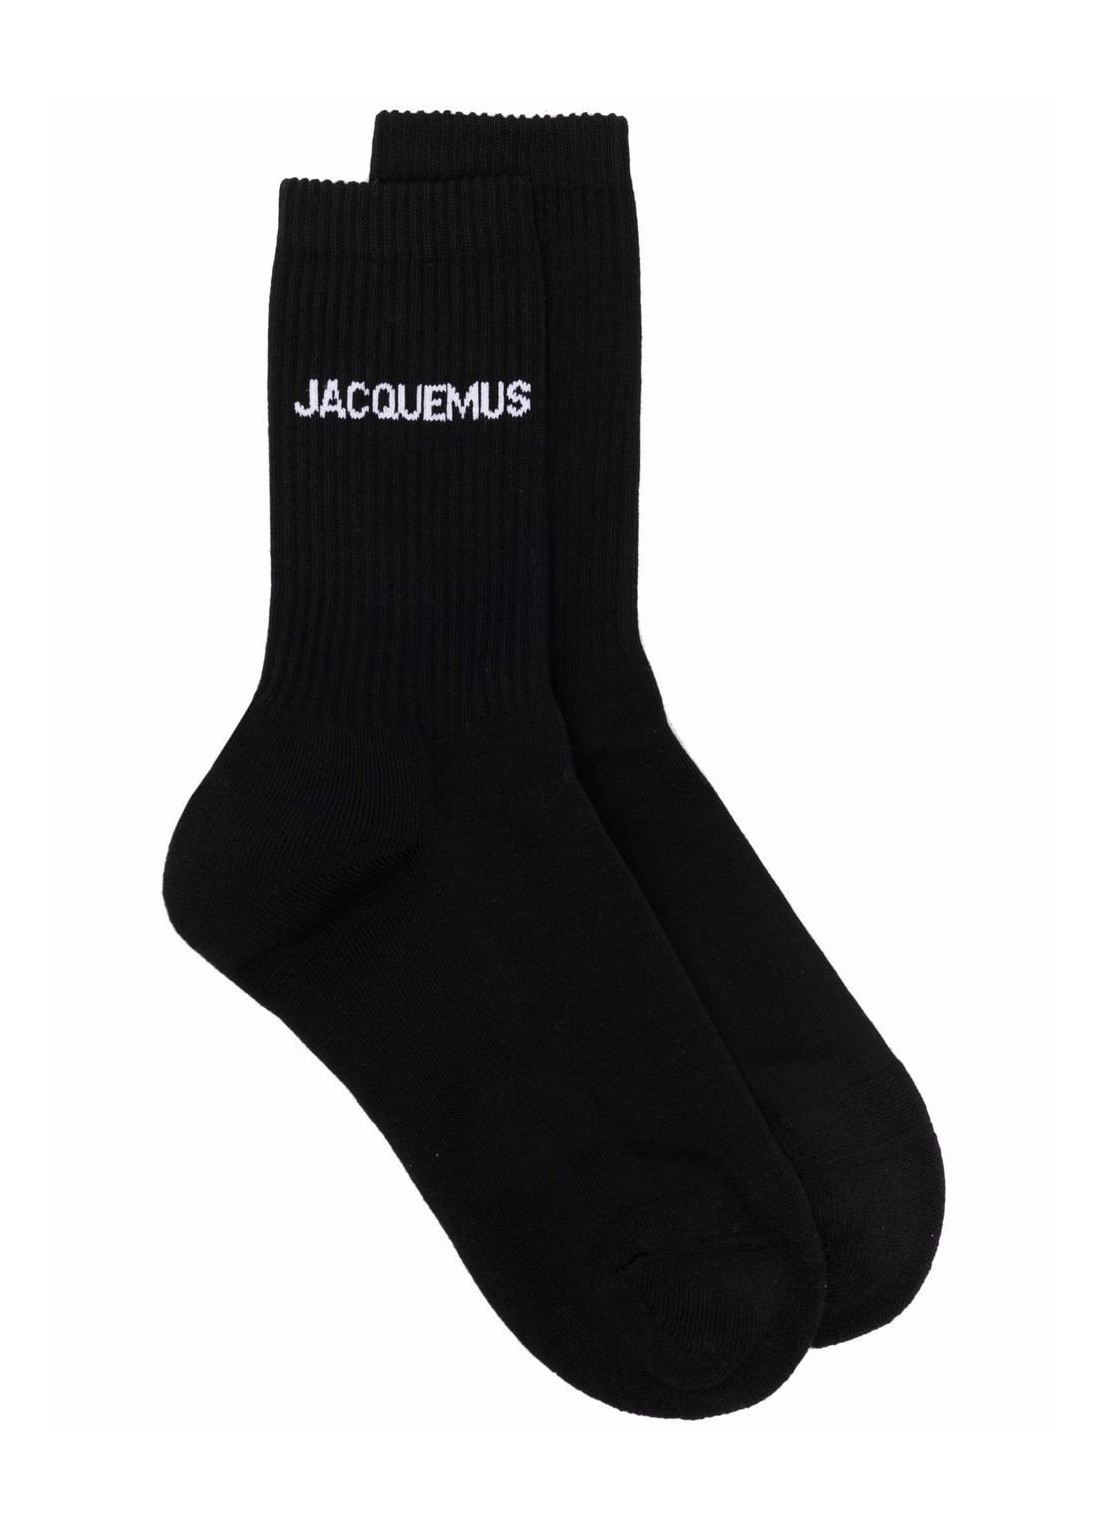 Calcetines jacquemus socks man les chaussettes jacquemus 21h213ac0035000 990 talla 43-46
 